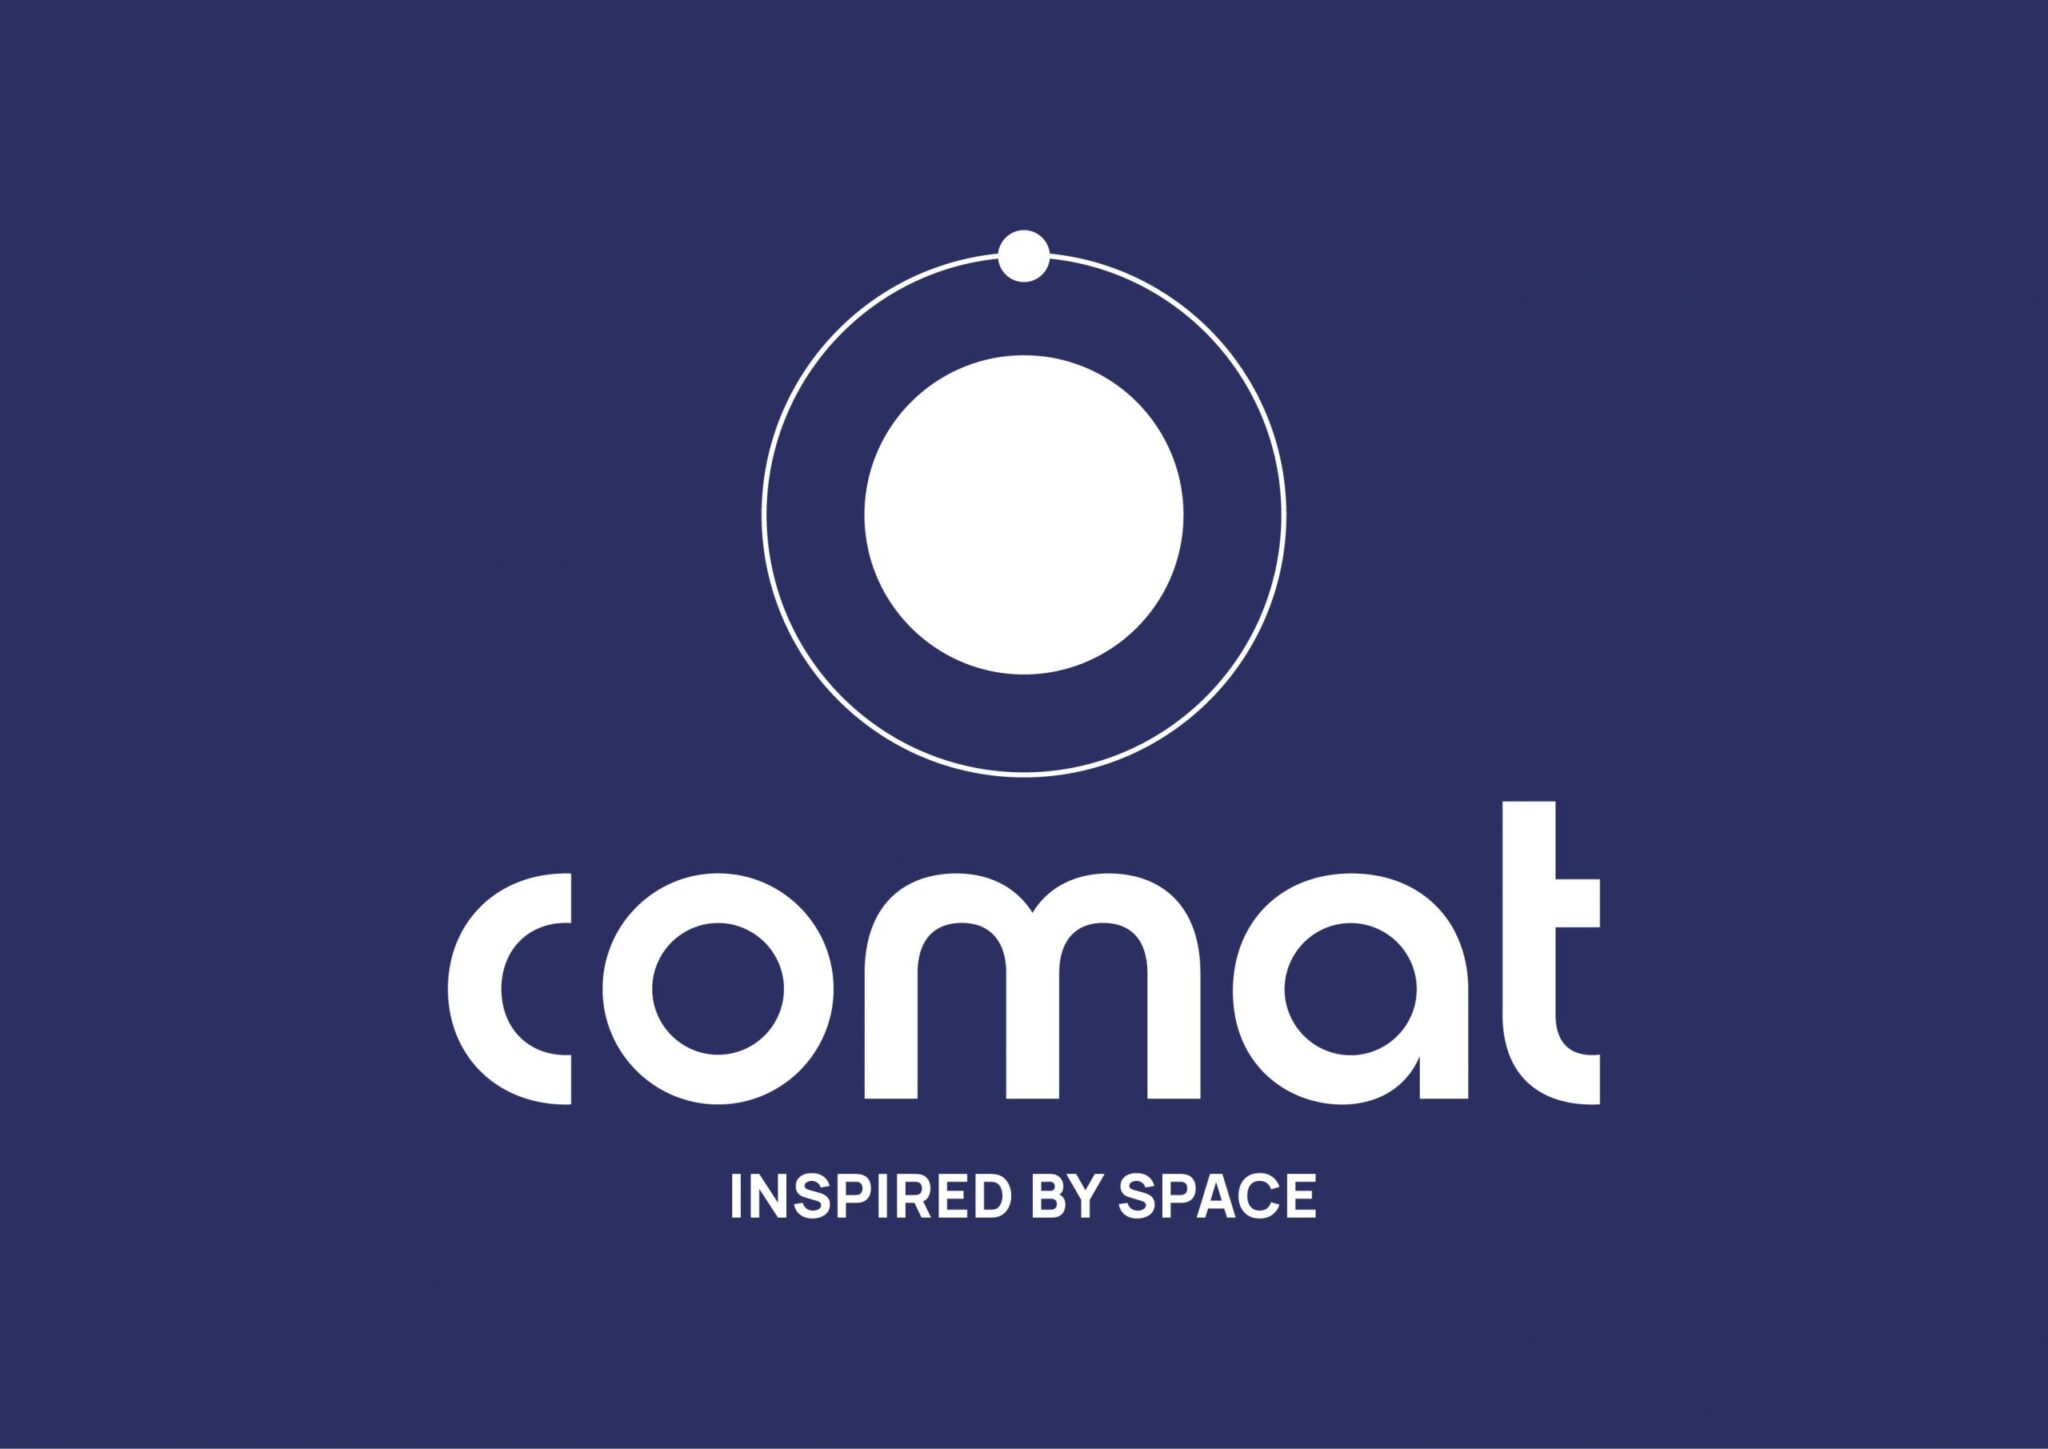 Logo Comat